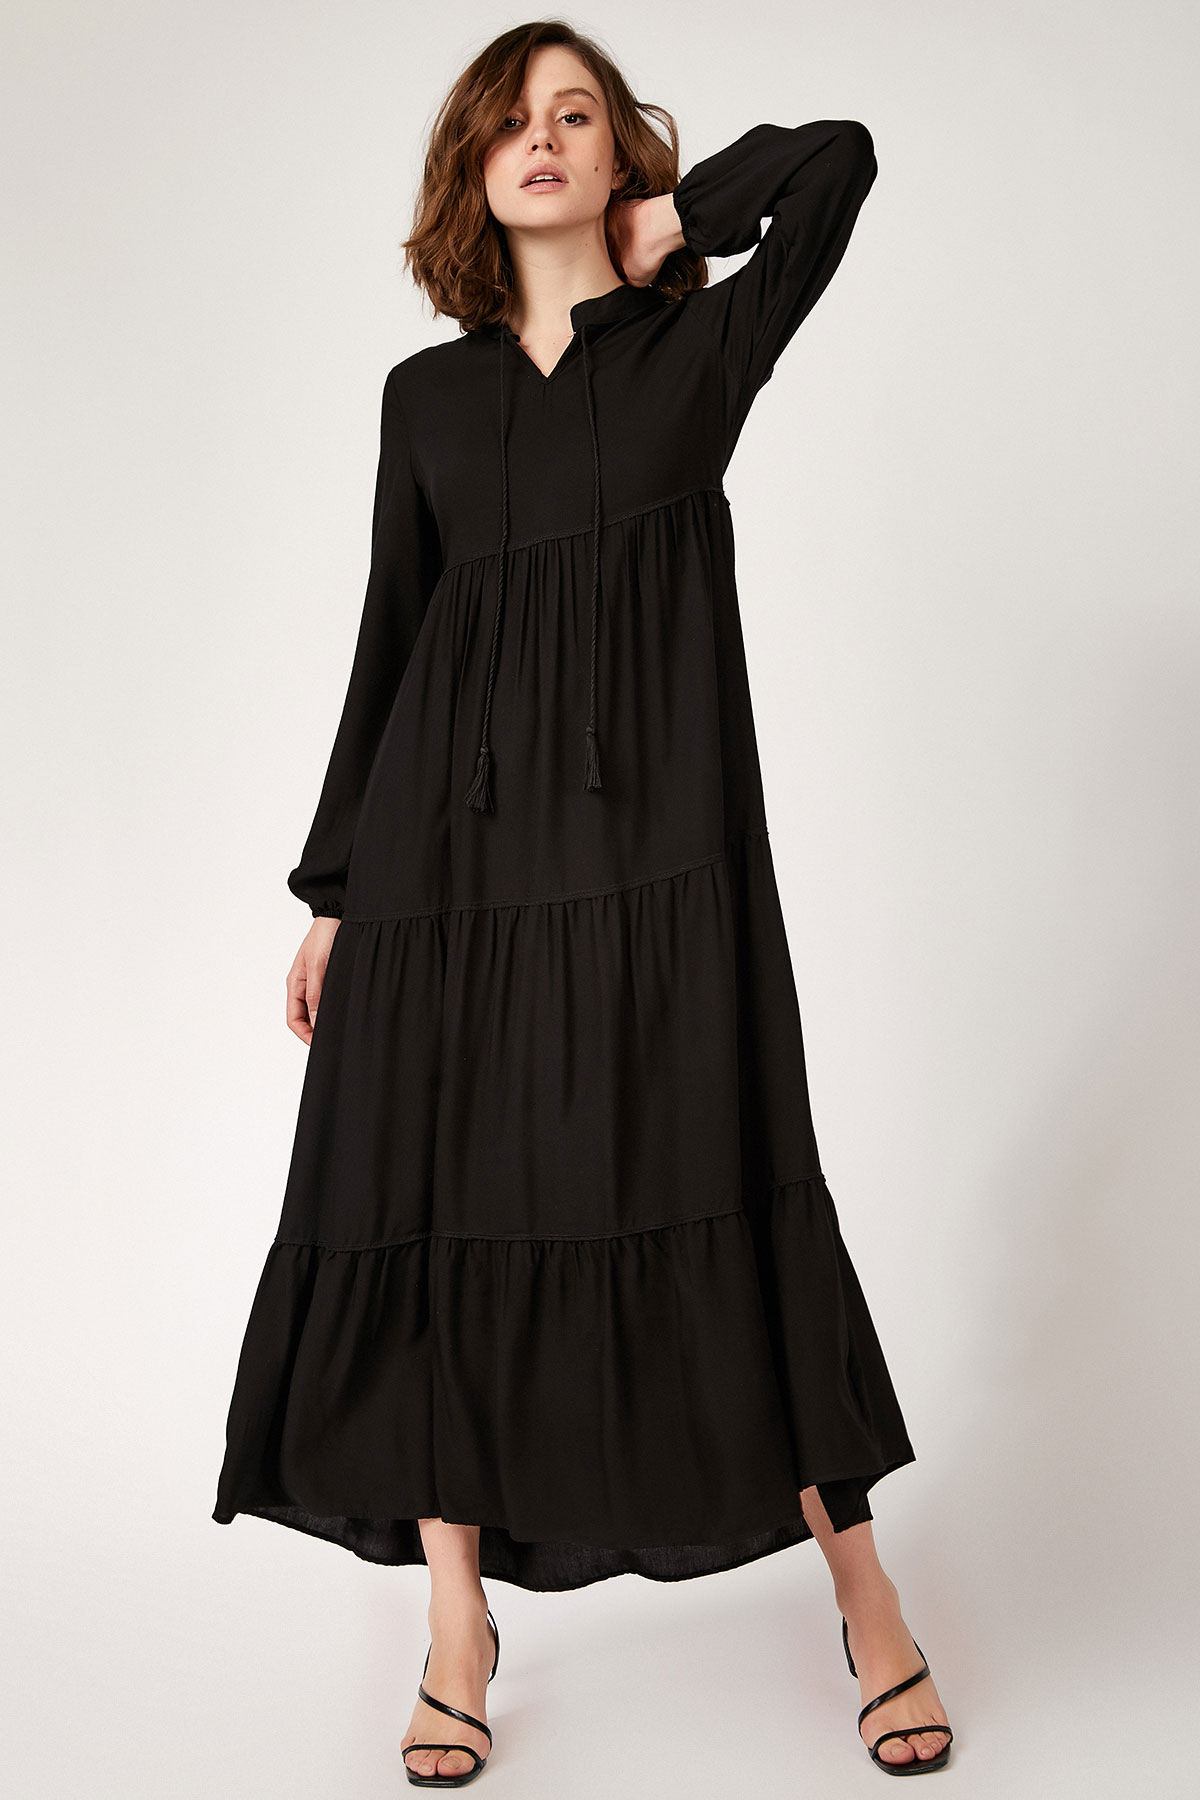 A model wears 46114 - Dress - Black, wholesale Dress of Bigdart to display at Lonca